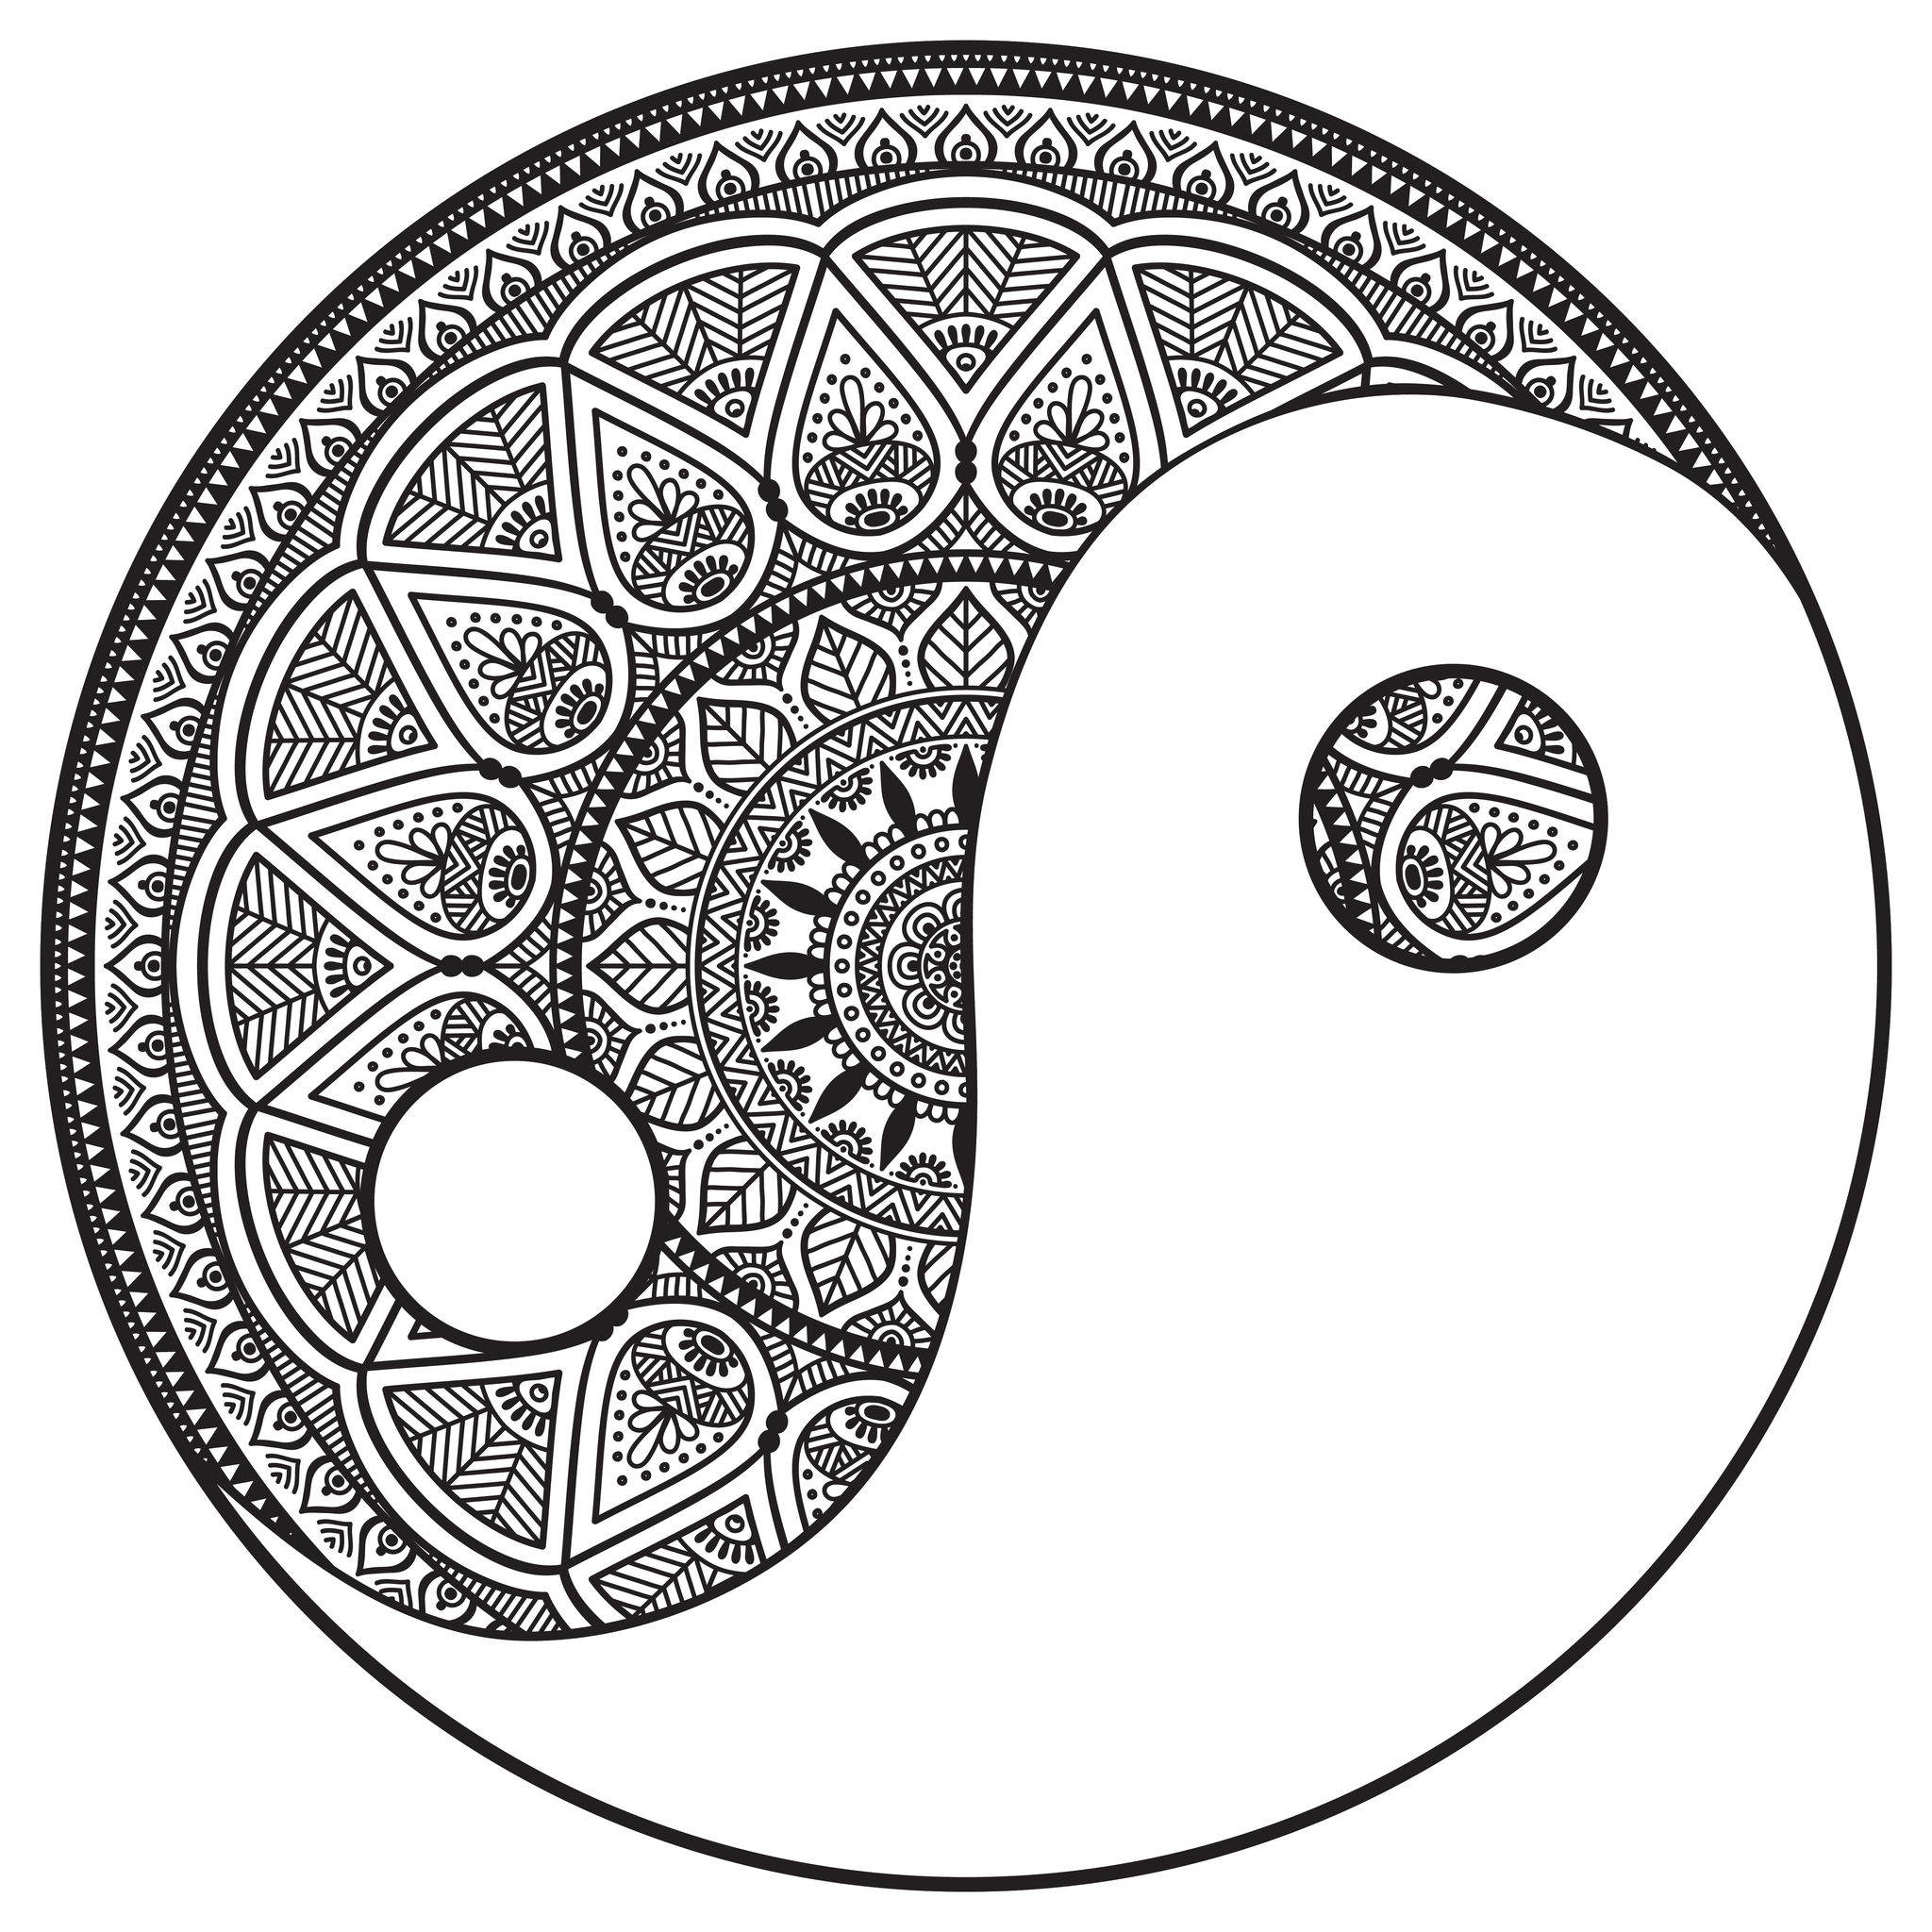 Yin and Yang Mandala, Artist : Snezh   Source : 123rf